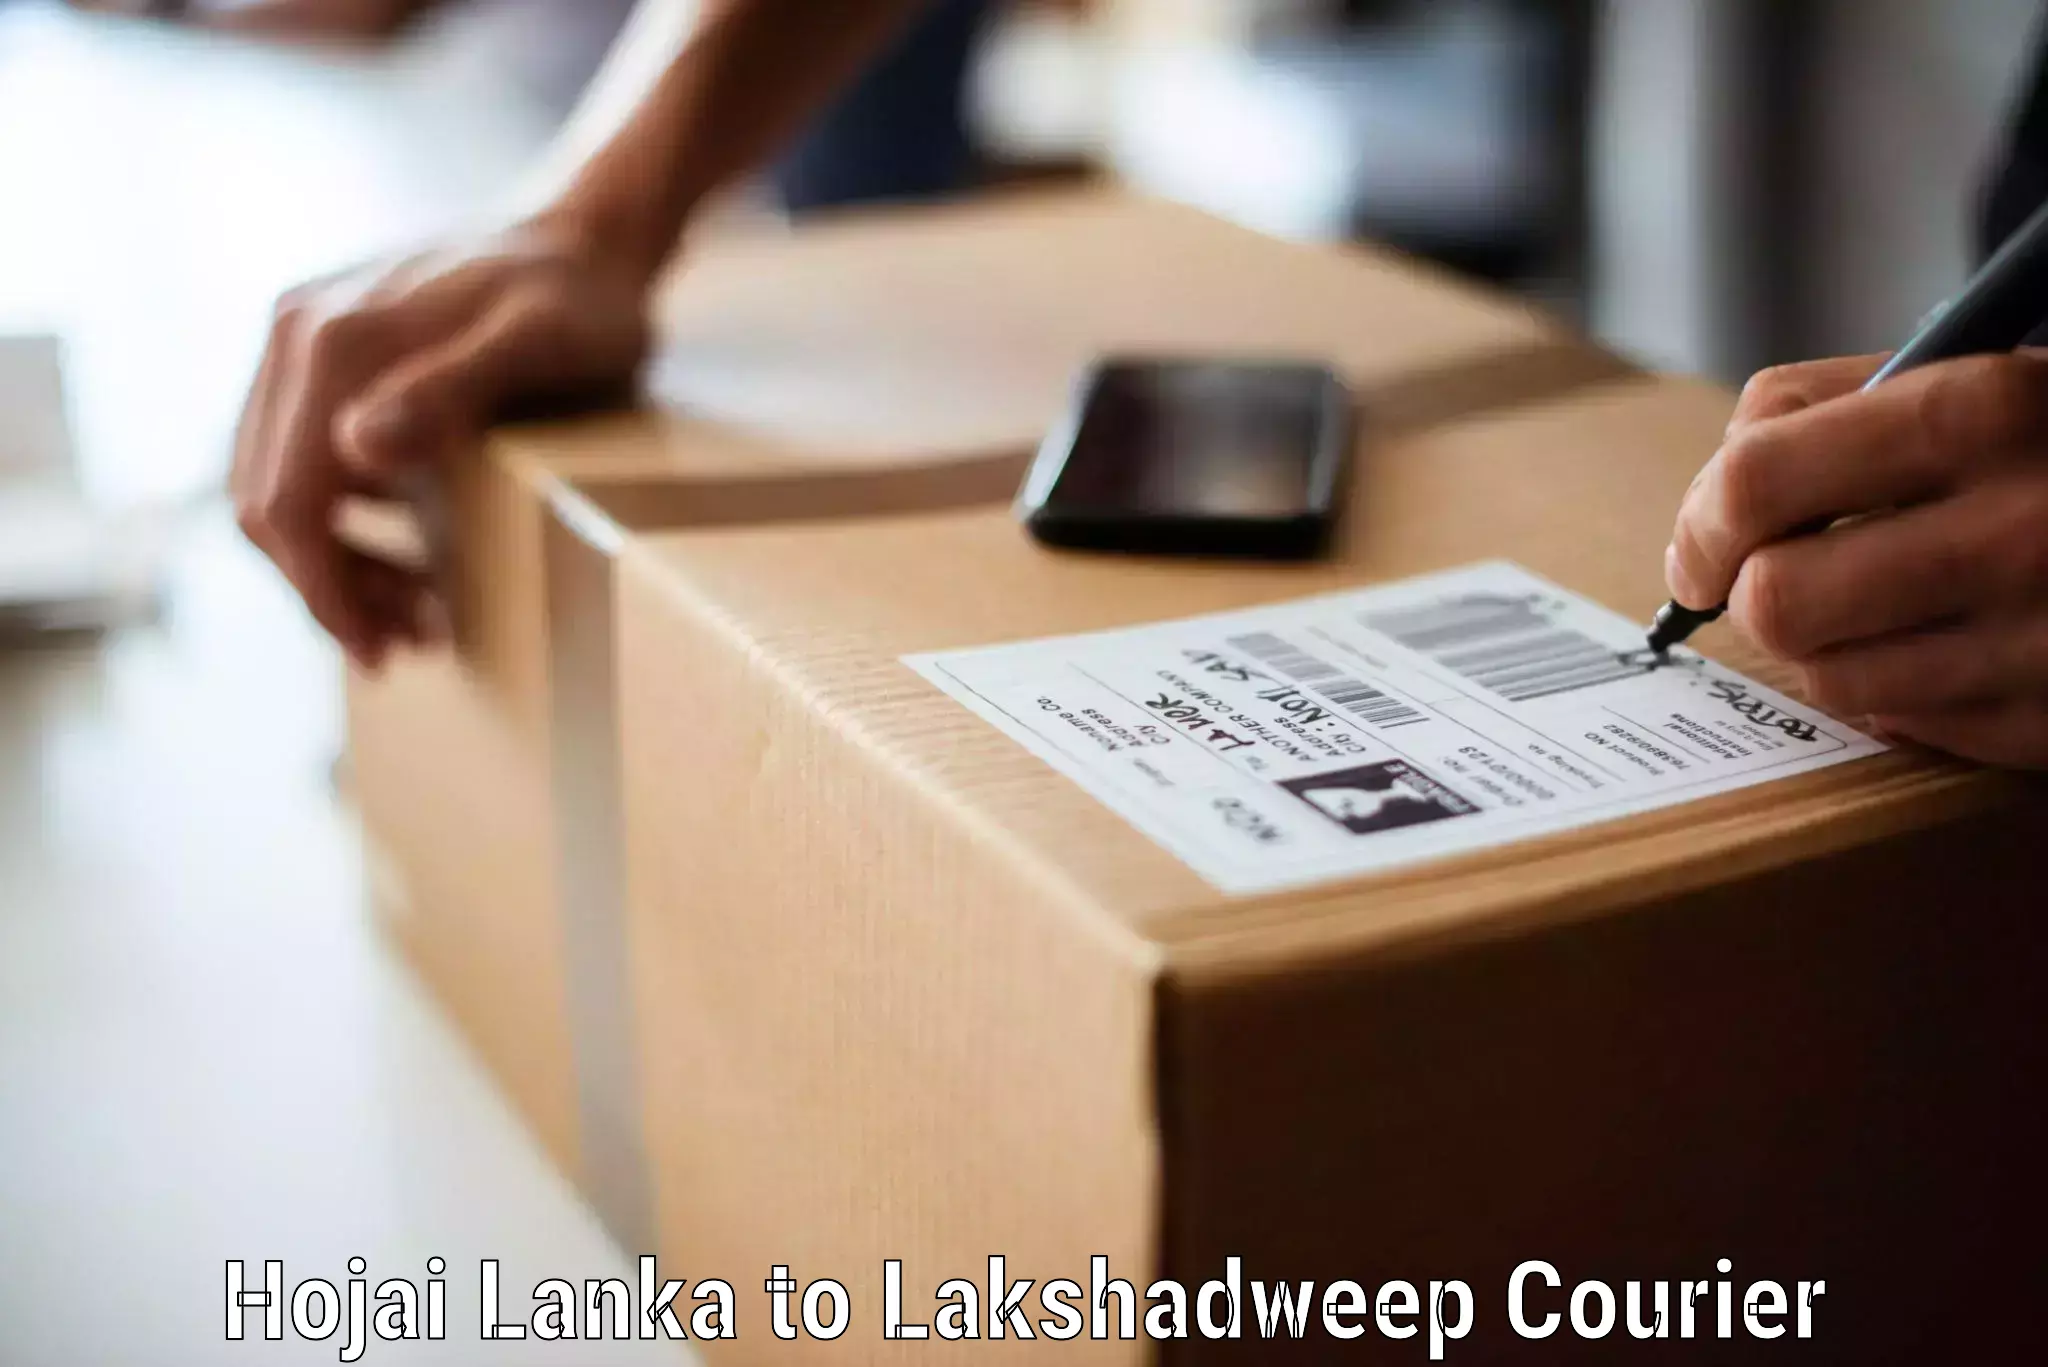 Household moving strategies Hojai Lanka to Lakshadweep